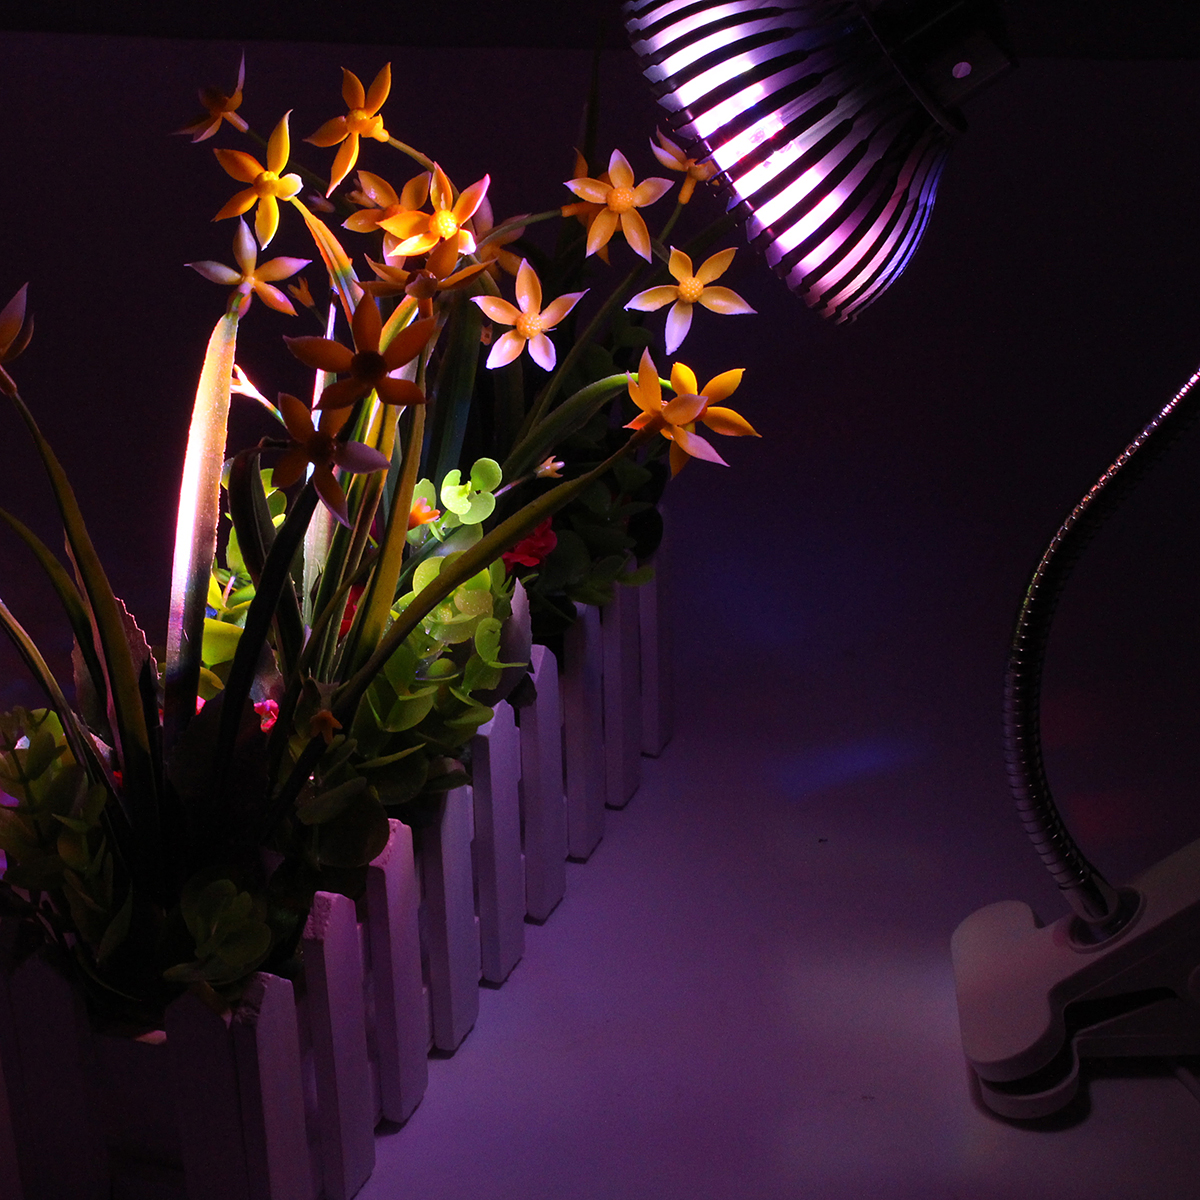 7W-LED-Plant-Grow-Light-US-Plug-Garden-and-Indoor-Planting-Wide-Illumination-1112113-2